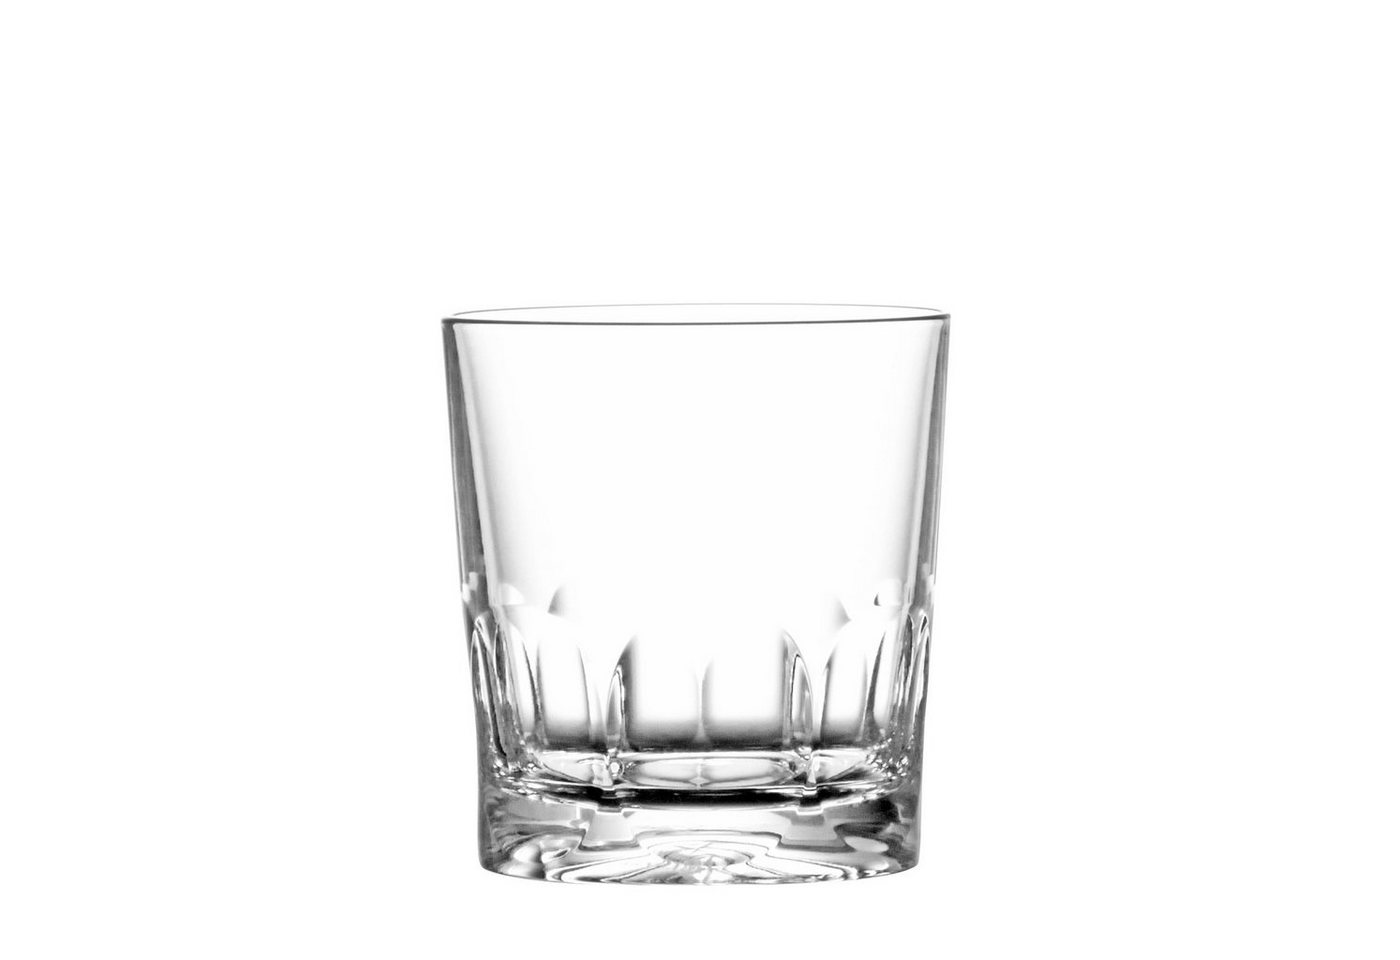 ARNSTADT KRISTALL Whiskyglas Whiskyglas Trinkglas Palais clear (9 cm) - Kristallglas mundgeblasen ·, Kristallglas von ARNSTADT KRISTALL